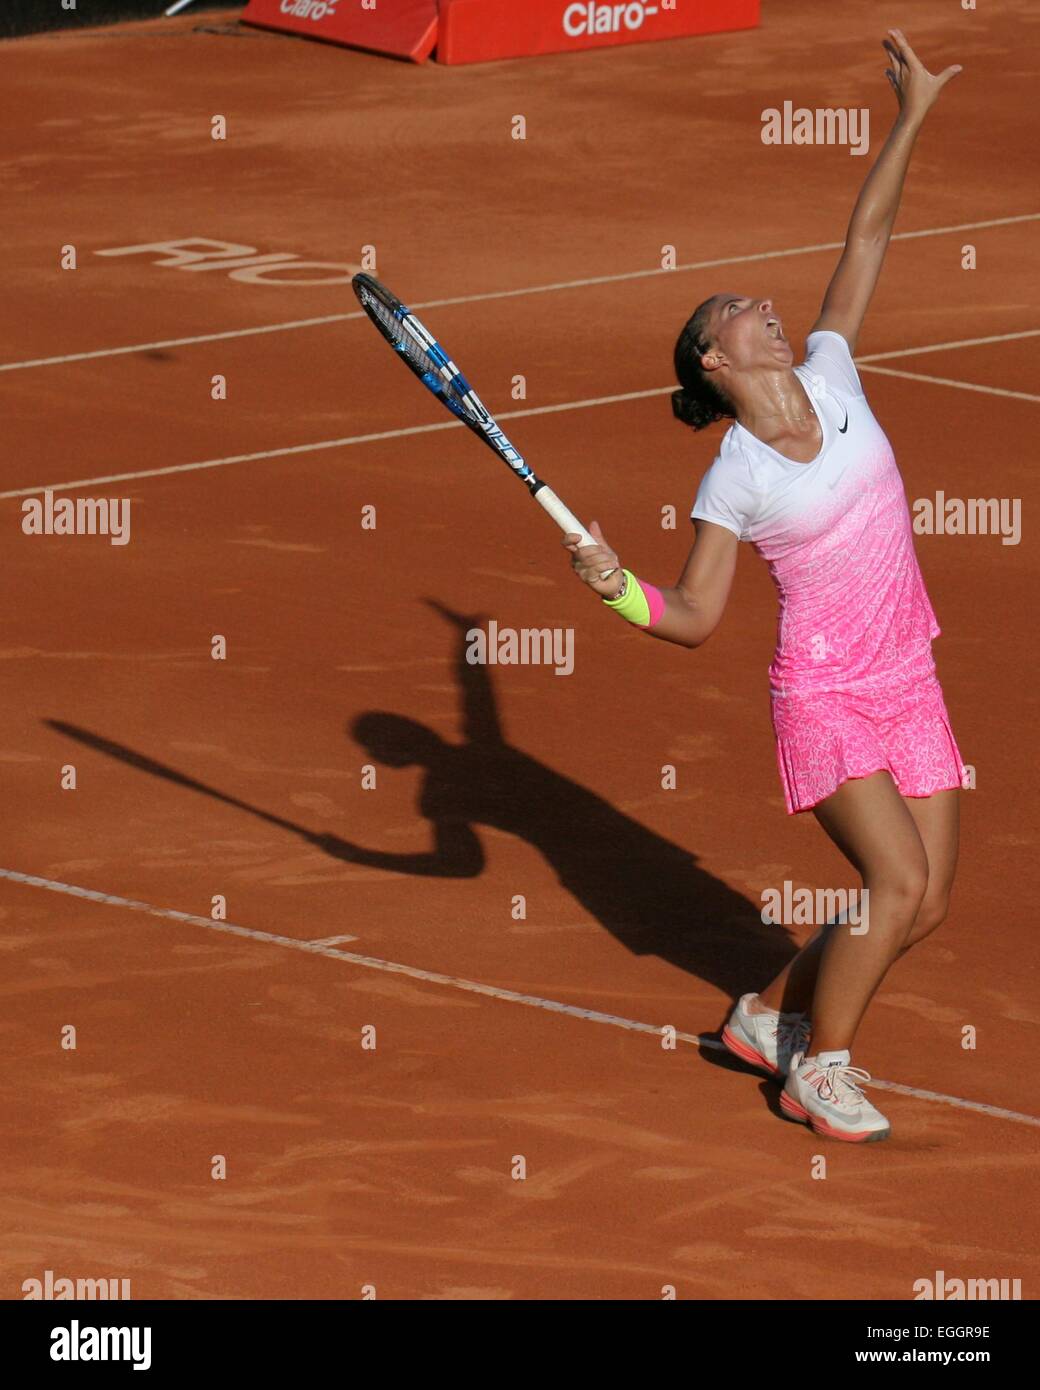 2015 Dubai Tennis Championships & Rio de Janeiro Rio Open Women's Singles Tennis  Scores (Sports - WTA Tennis)